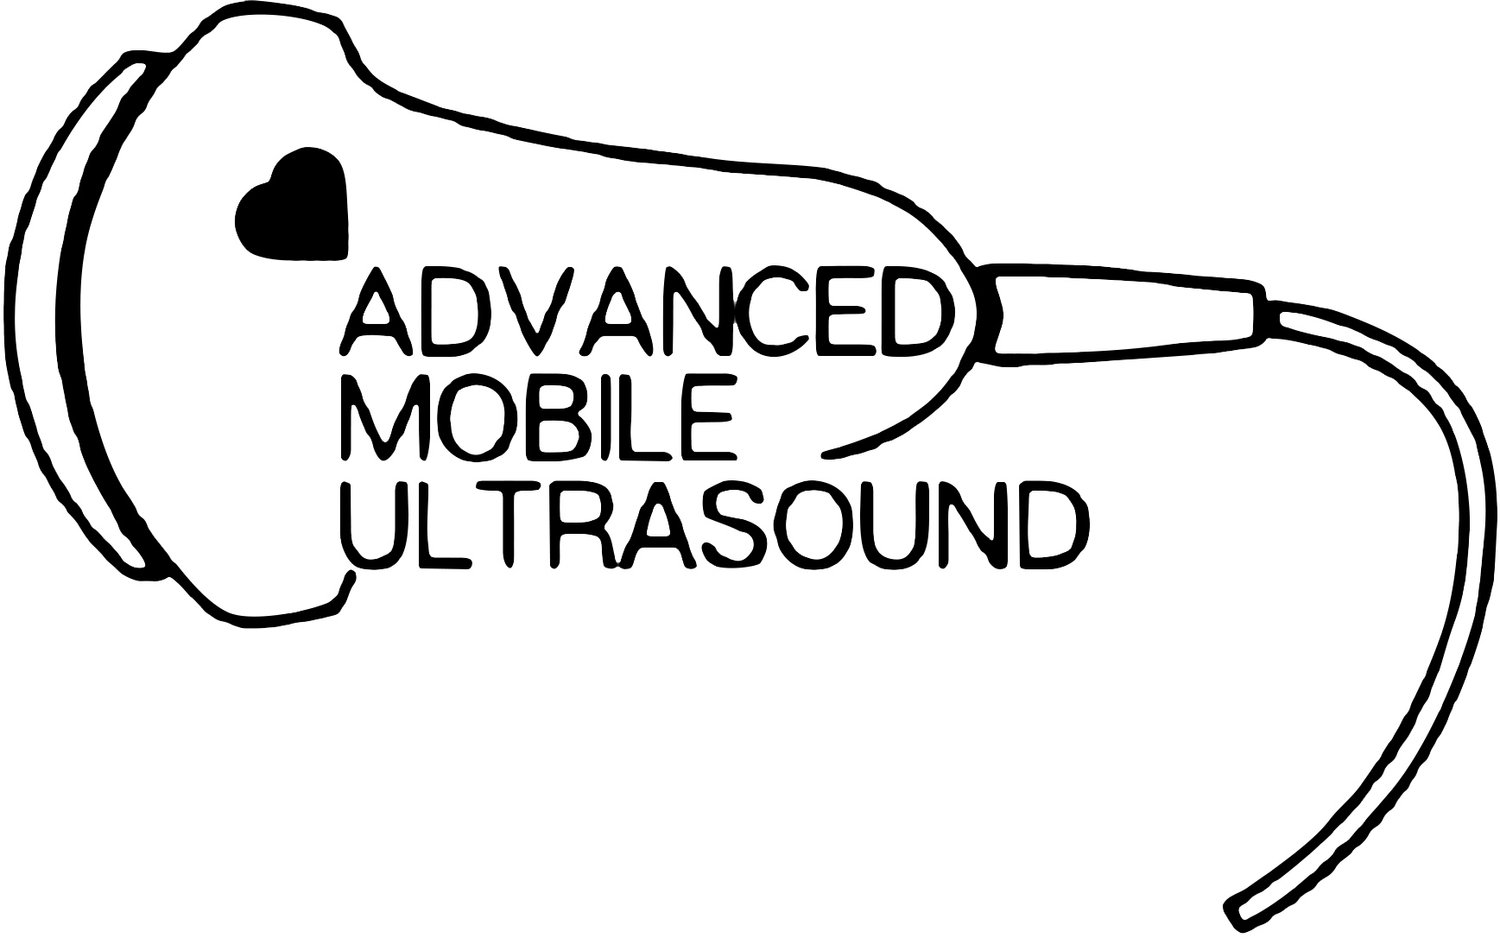 Advanced Mobile Ultrasound